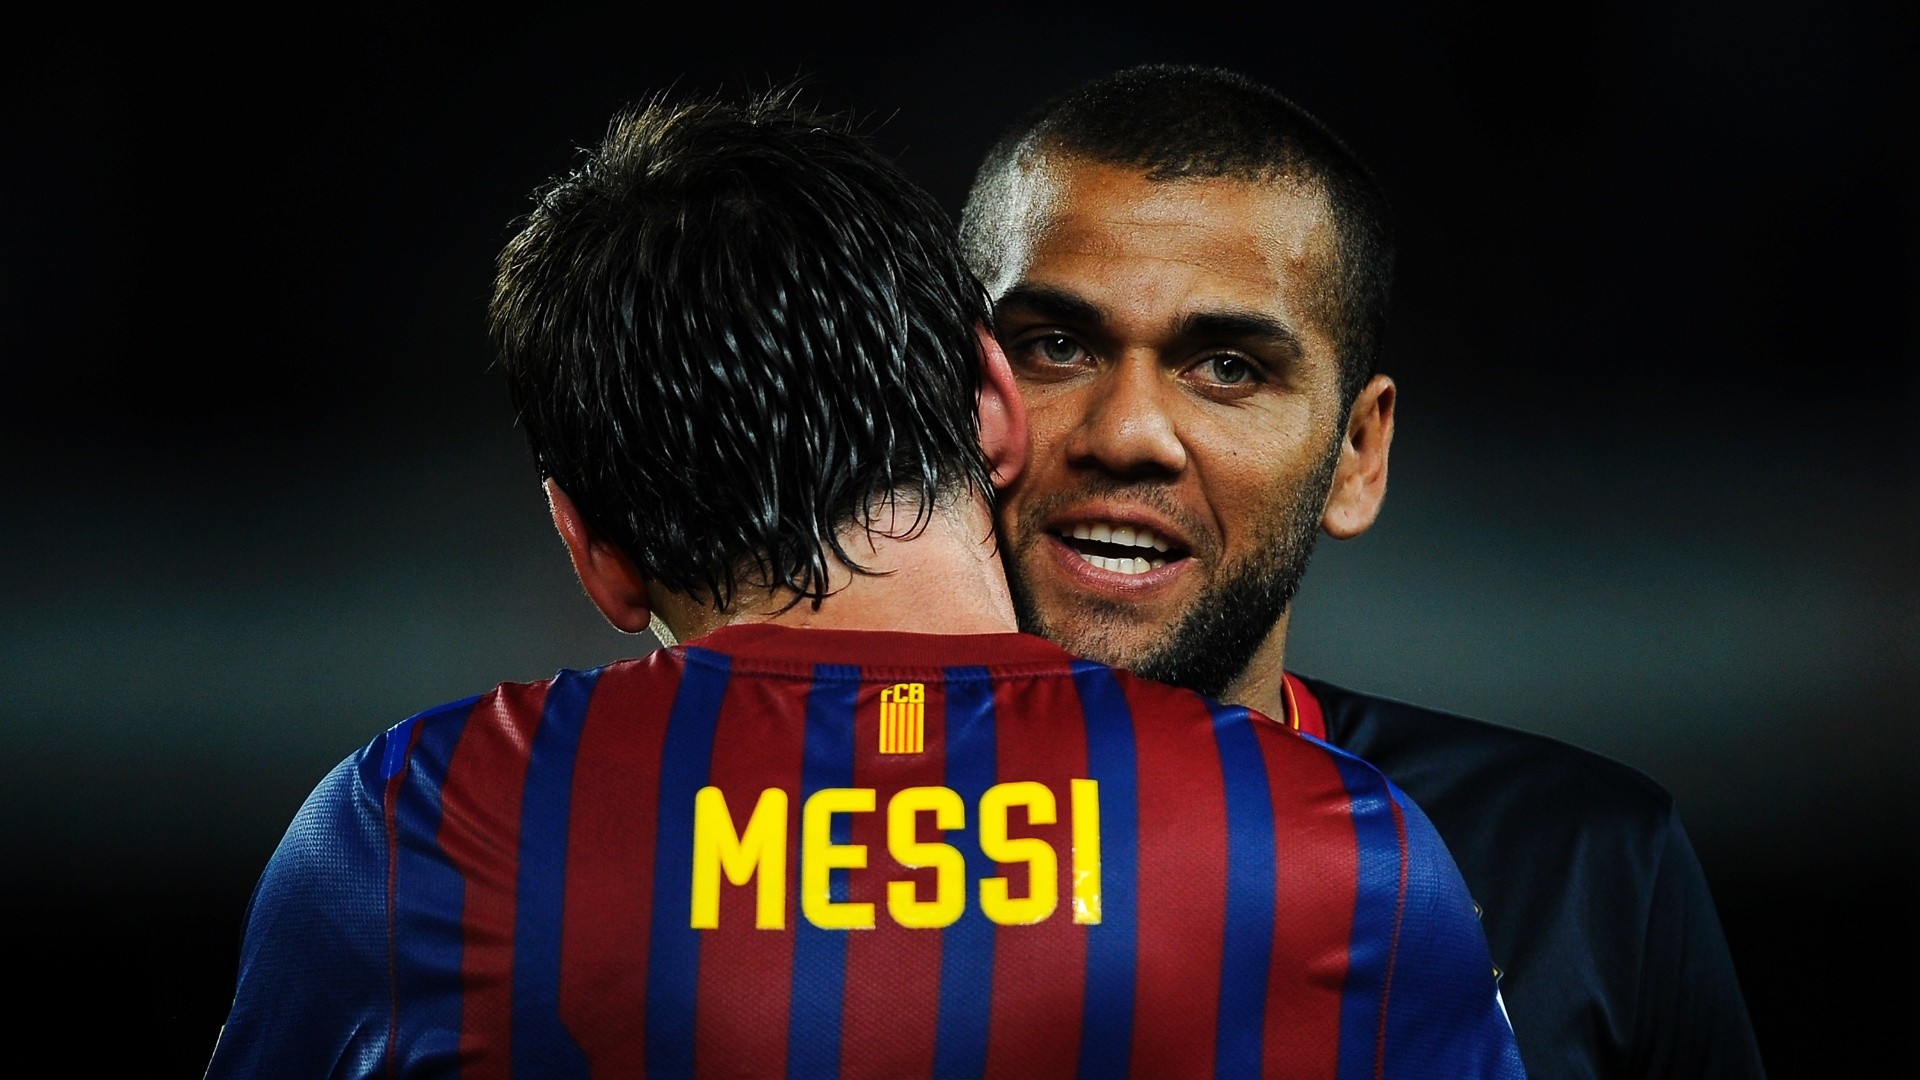 1920x1080 Barcelona Player Messi And Daniel Alves Hug Wallpaper